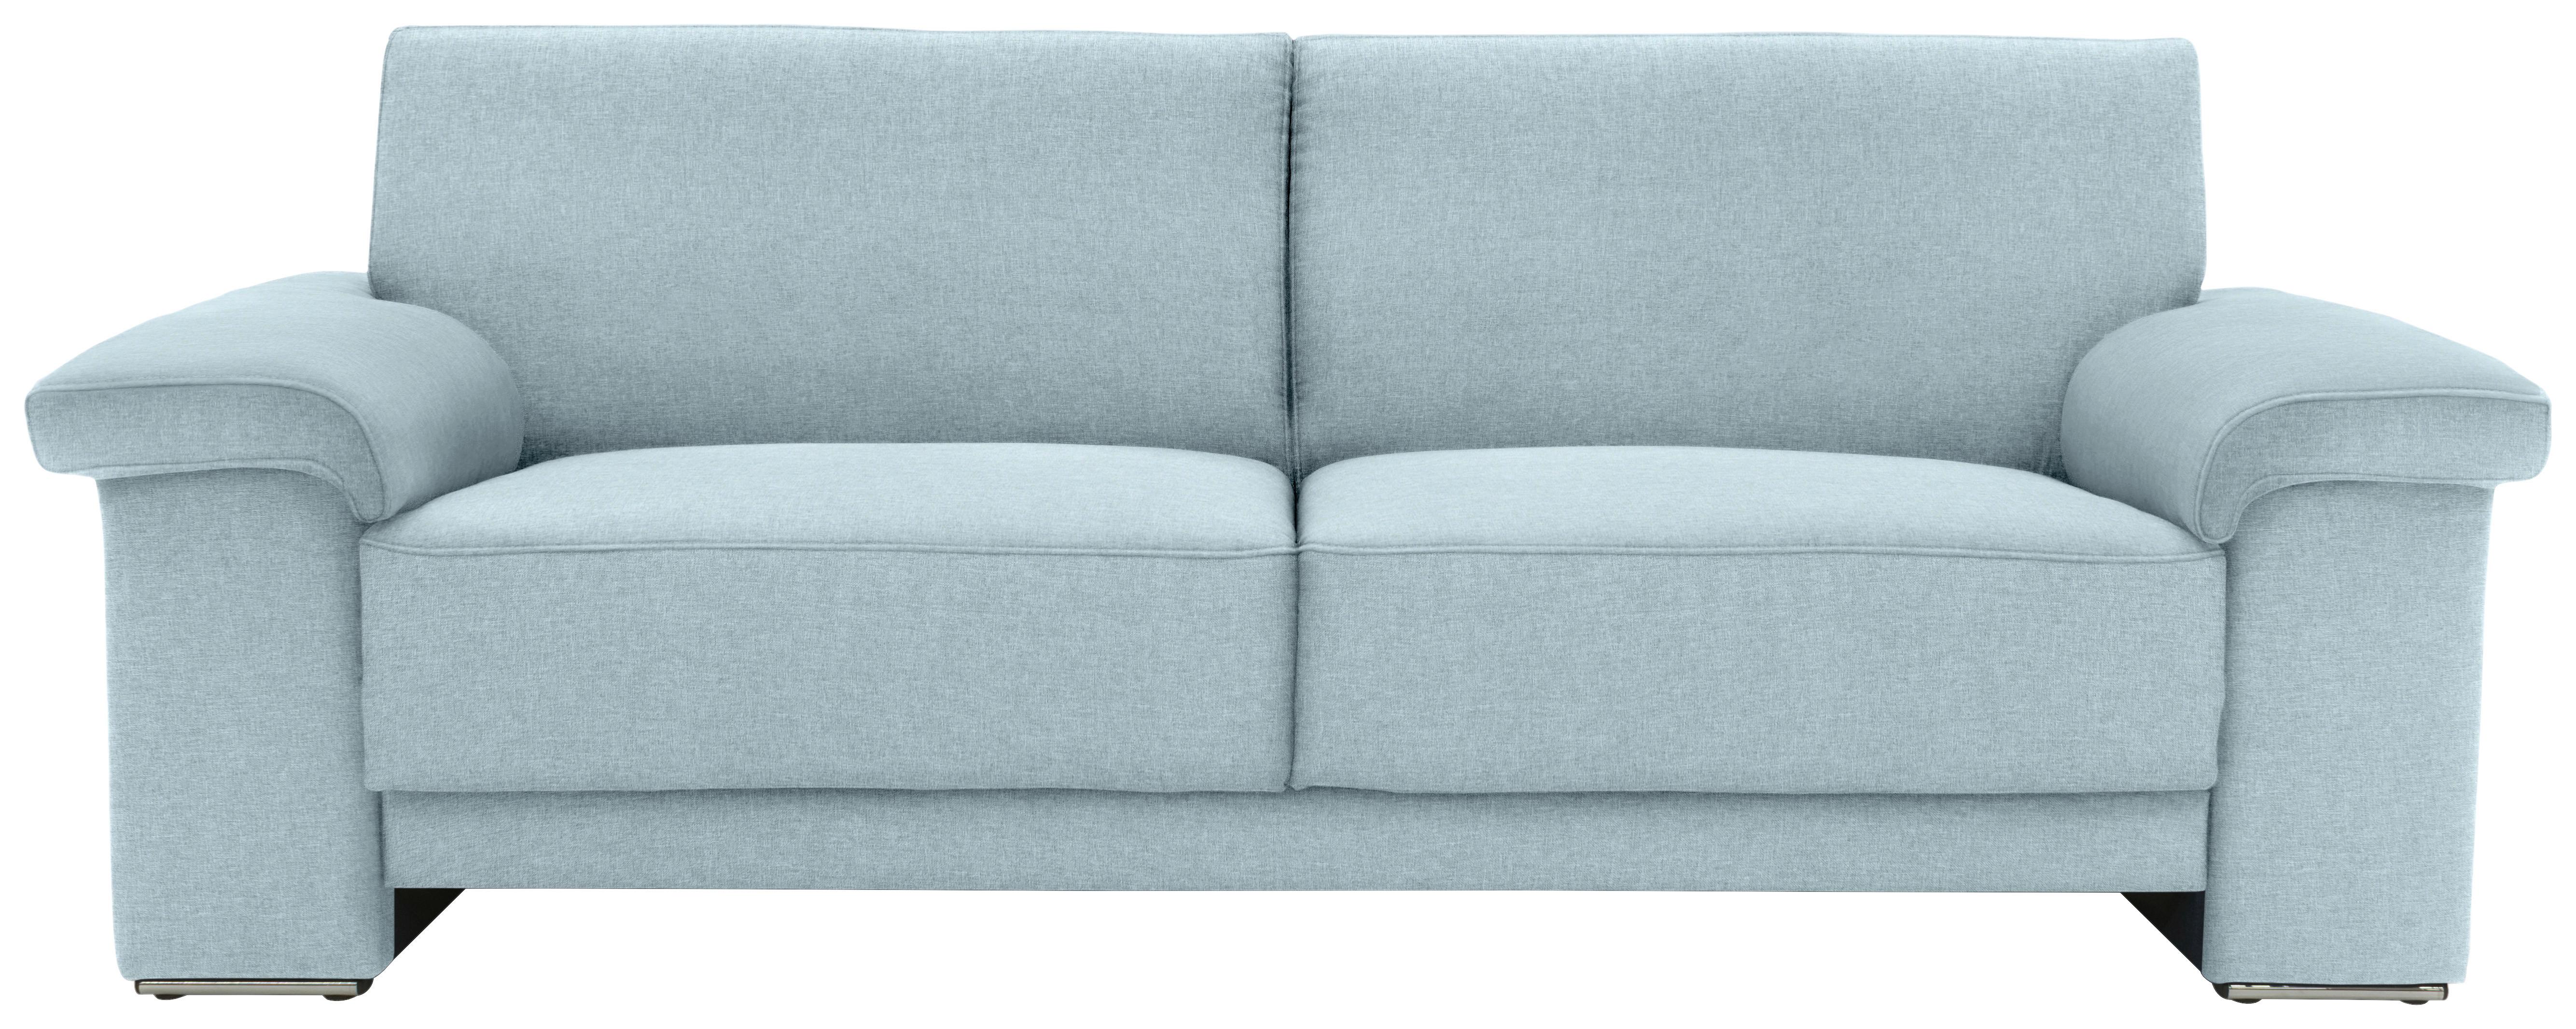 3-Sitzer-Sofa Arizona Armlehnen Hellblau - Chromfarben/Hellblau, KONVENTIONELL, Textil (214/84/91cm) - MID.YOU